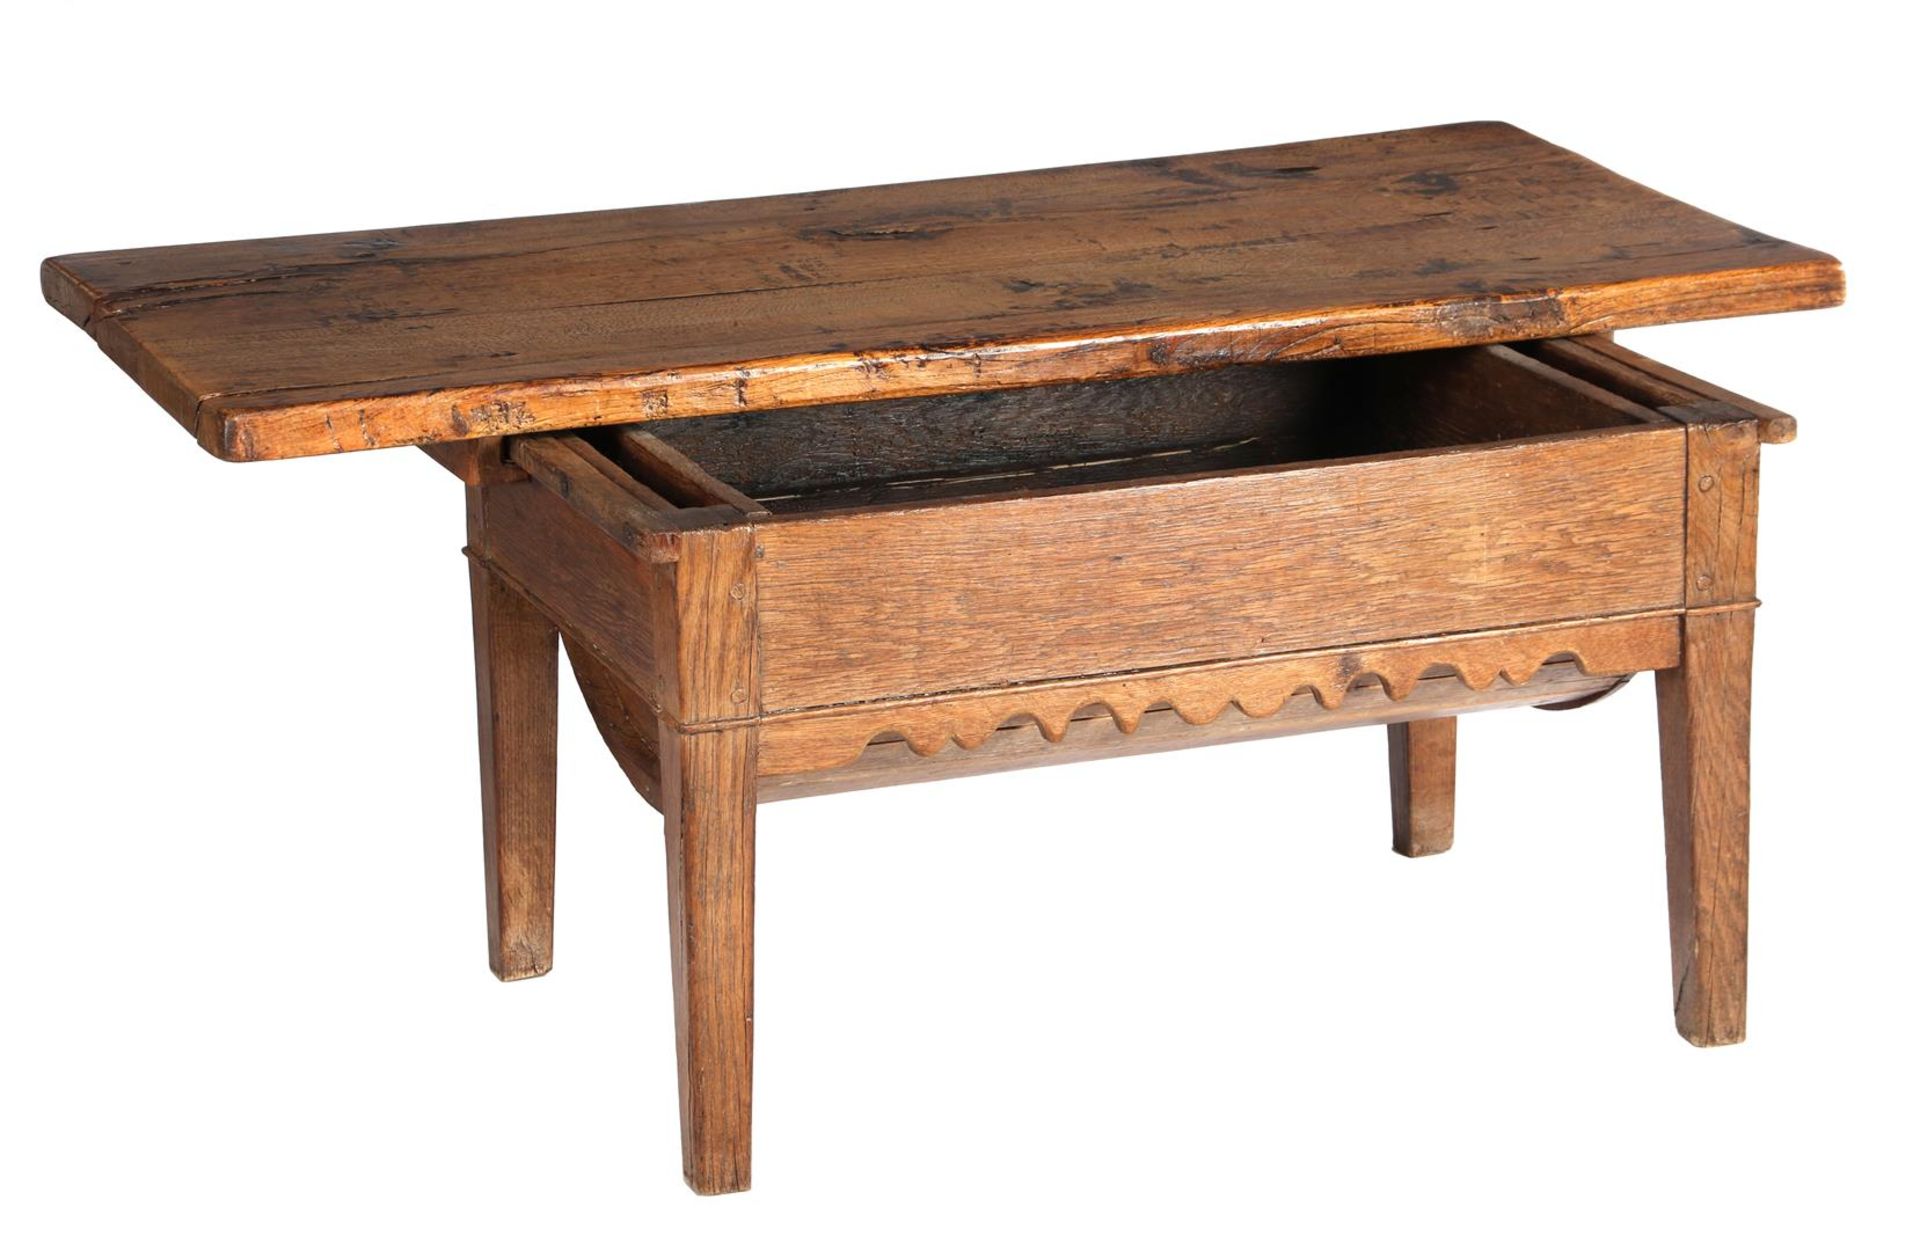 Oak coffee table - Image 2 of 2